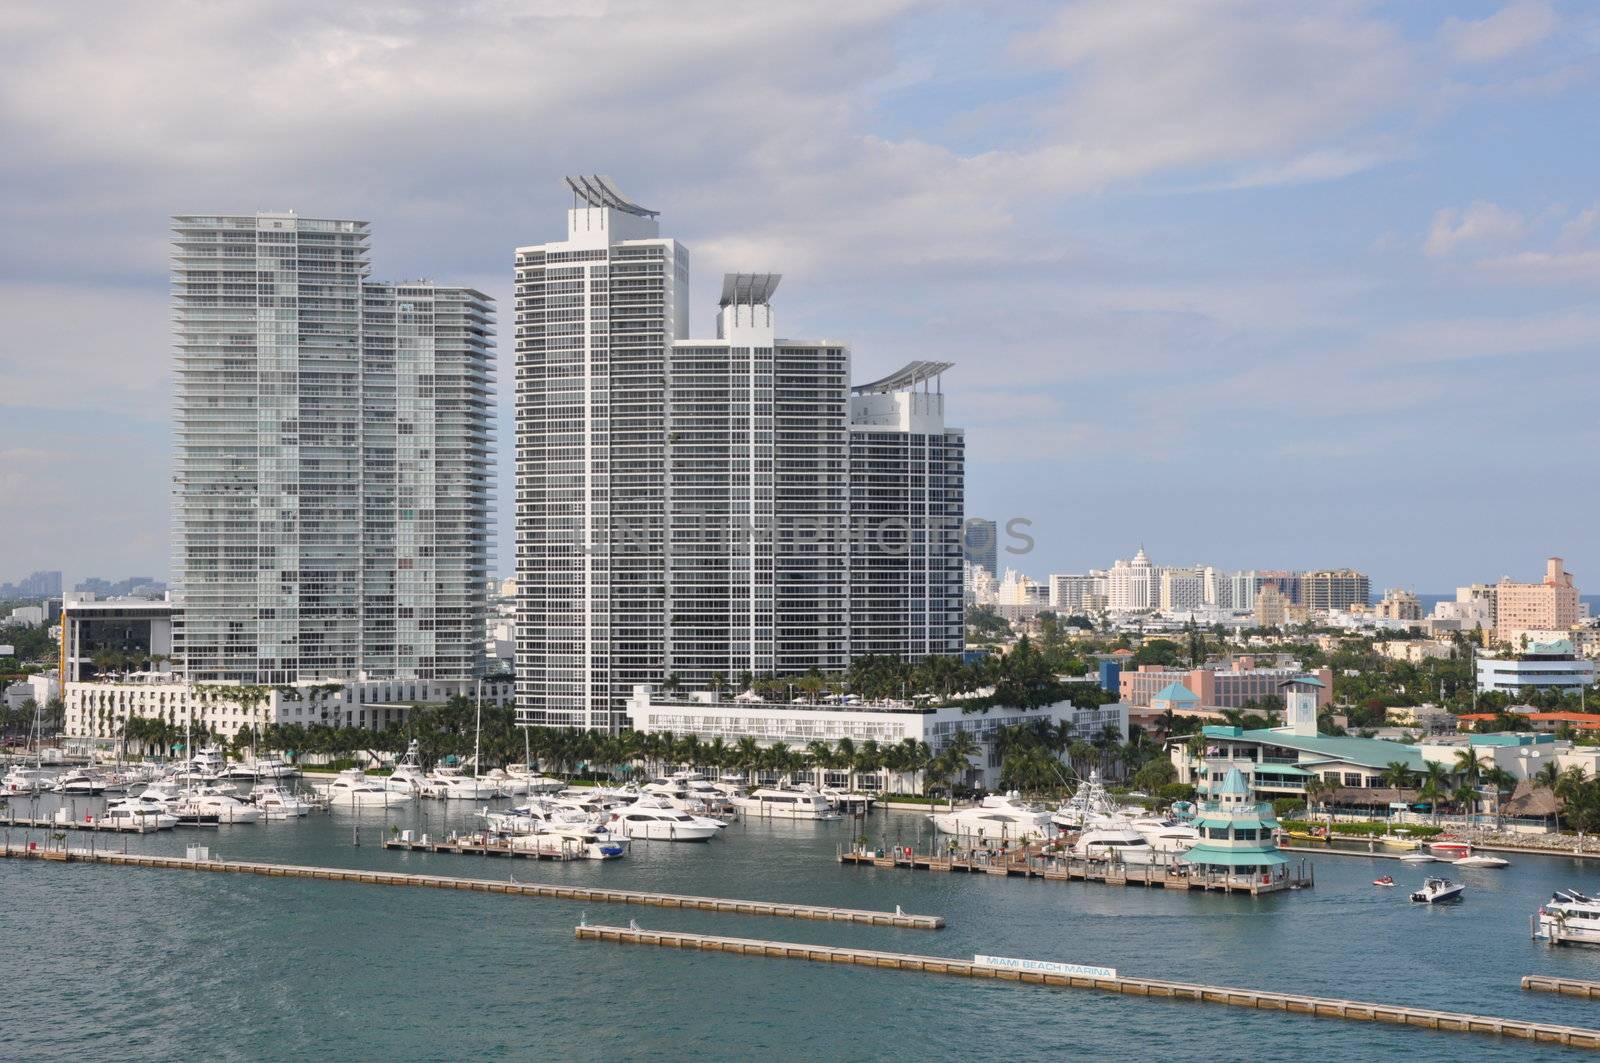 Miami in Florida by sainaniritu